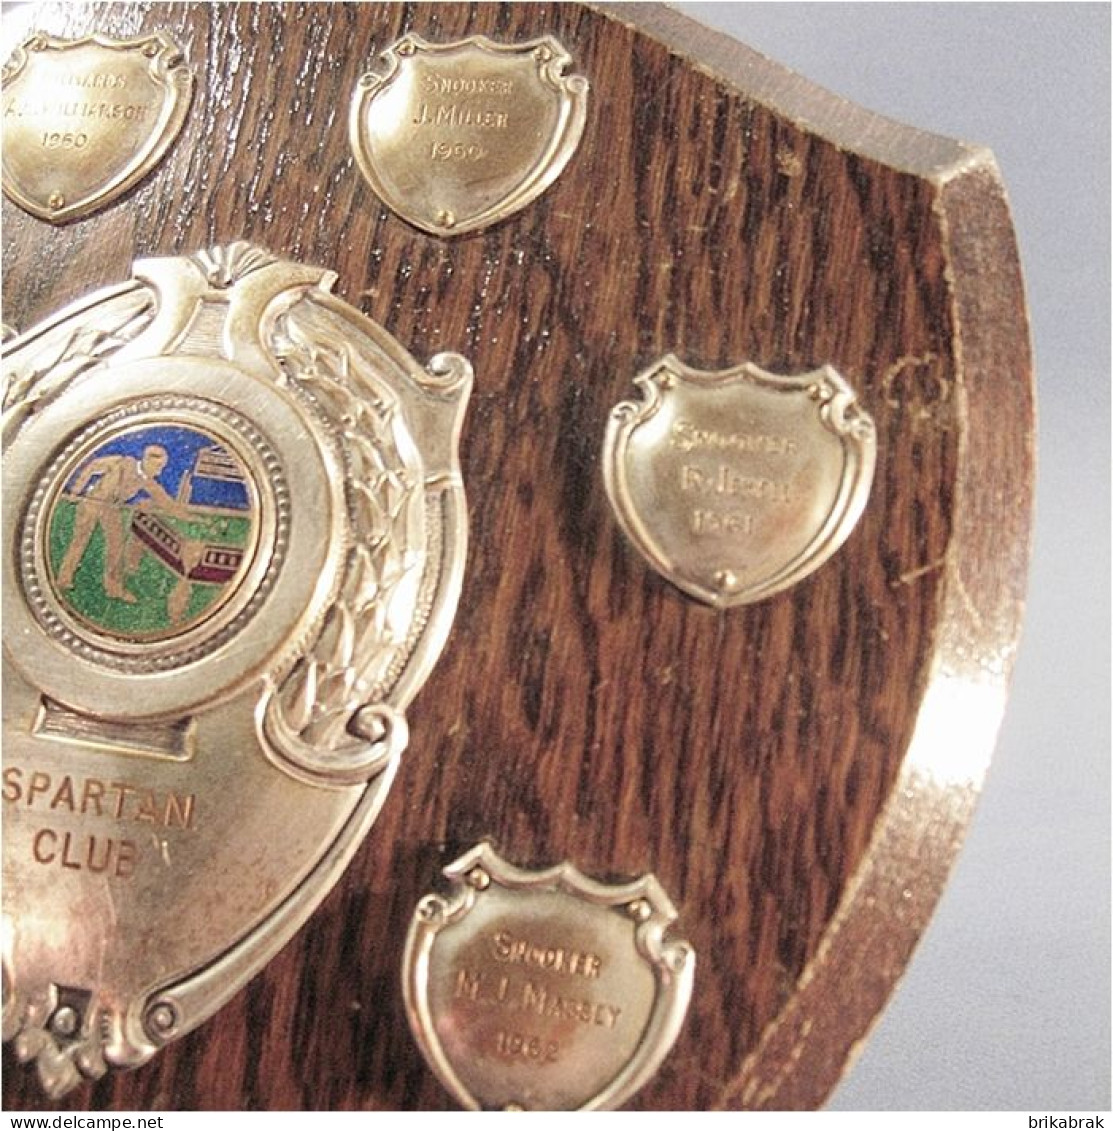 * TROPHEE DE BILLARD SPARTAN CLUB @ Trophée Récompense Londres Sport - Billiards